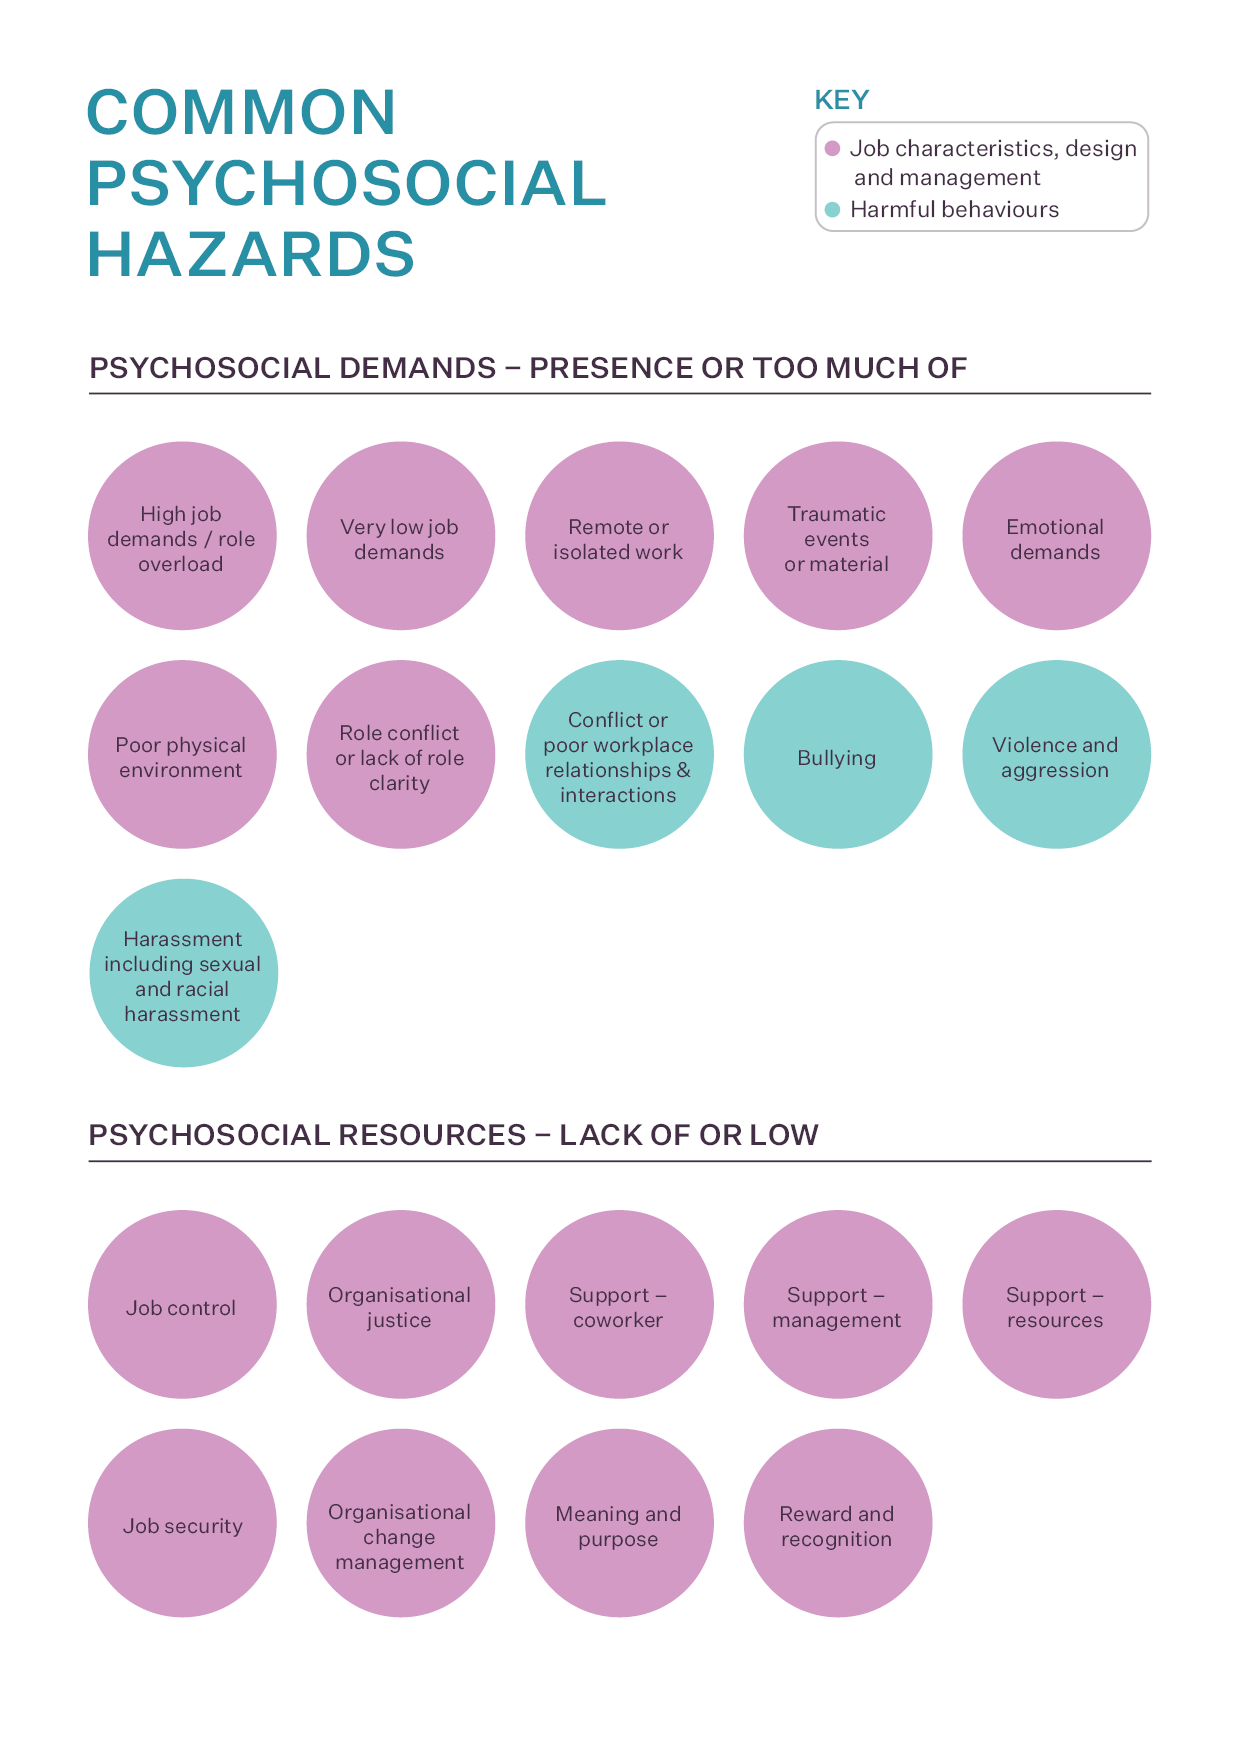 Graphic representation of Common Psychosocial hazards including job characteristics and harmful behaviours